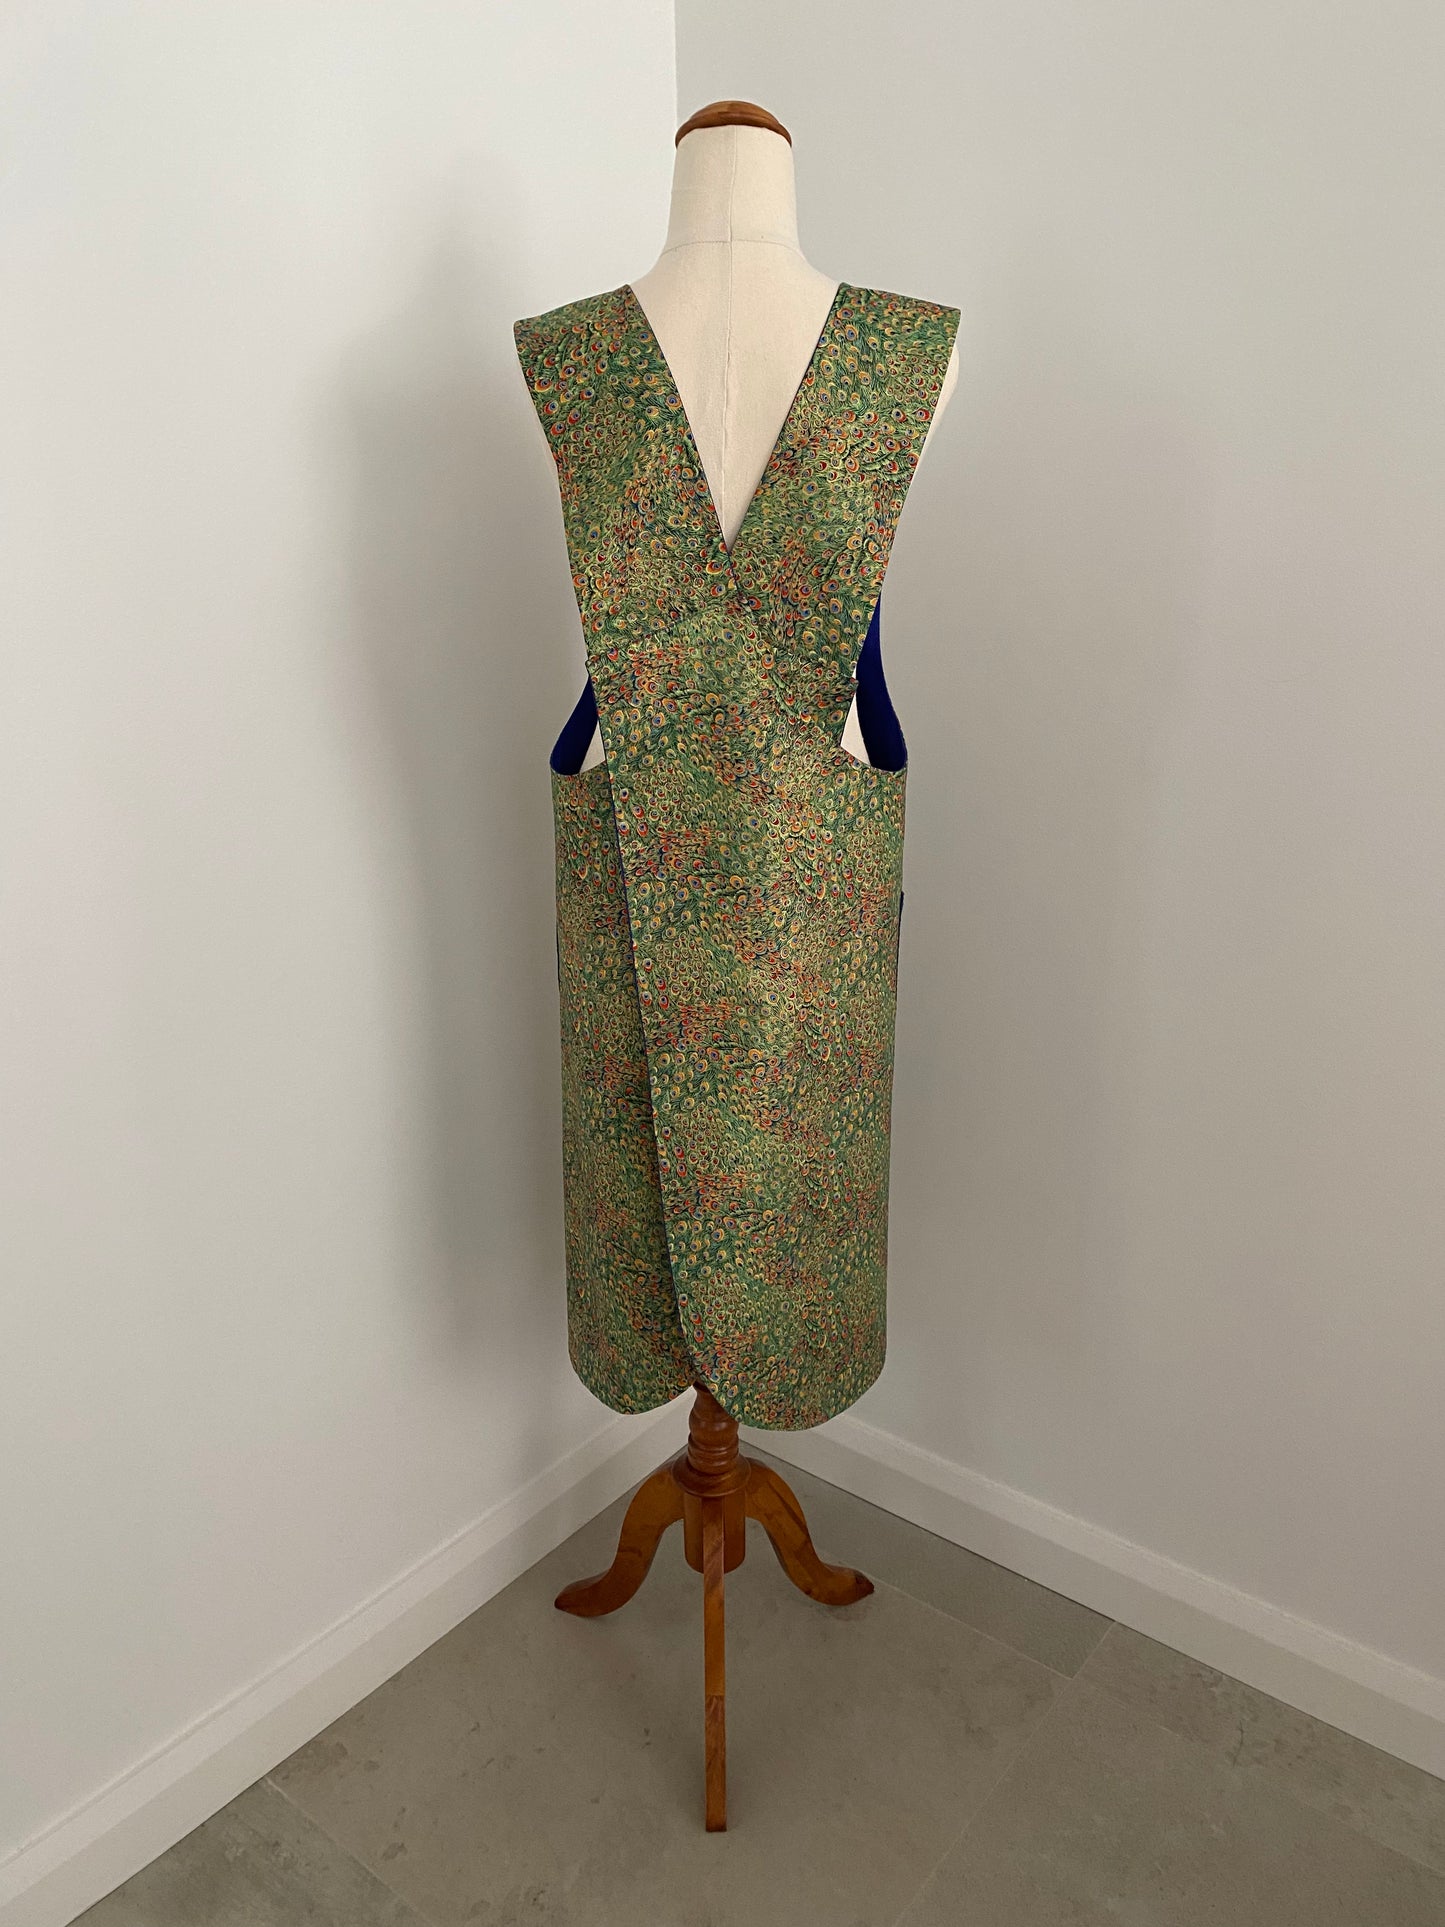 Wrap-Around Apron - Green Peacock Fabric